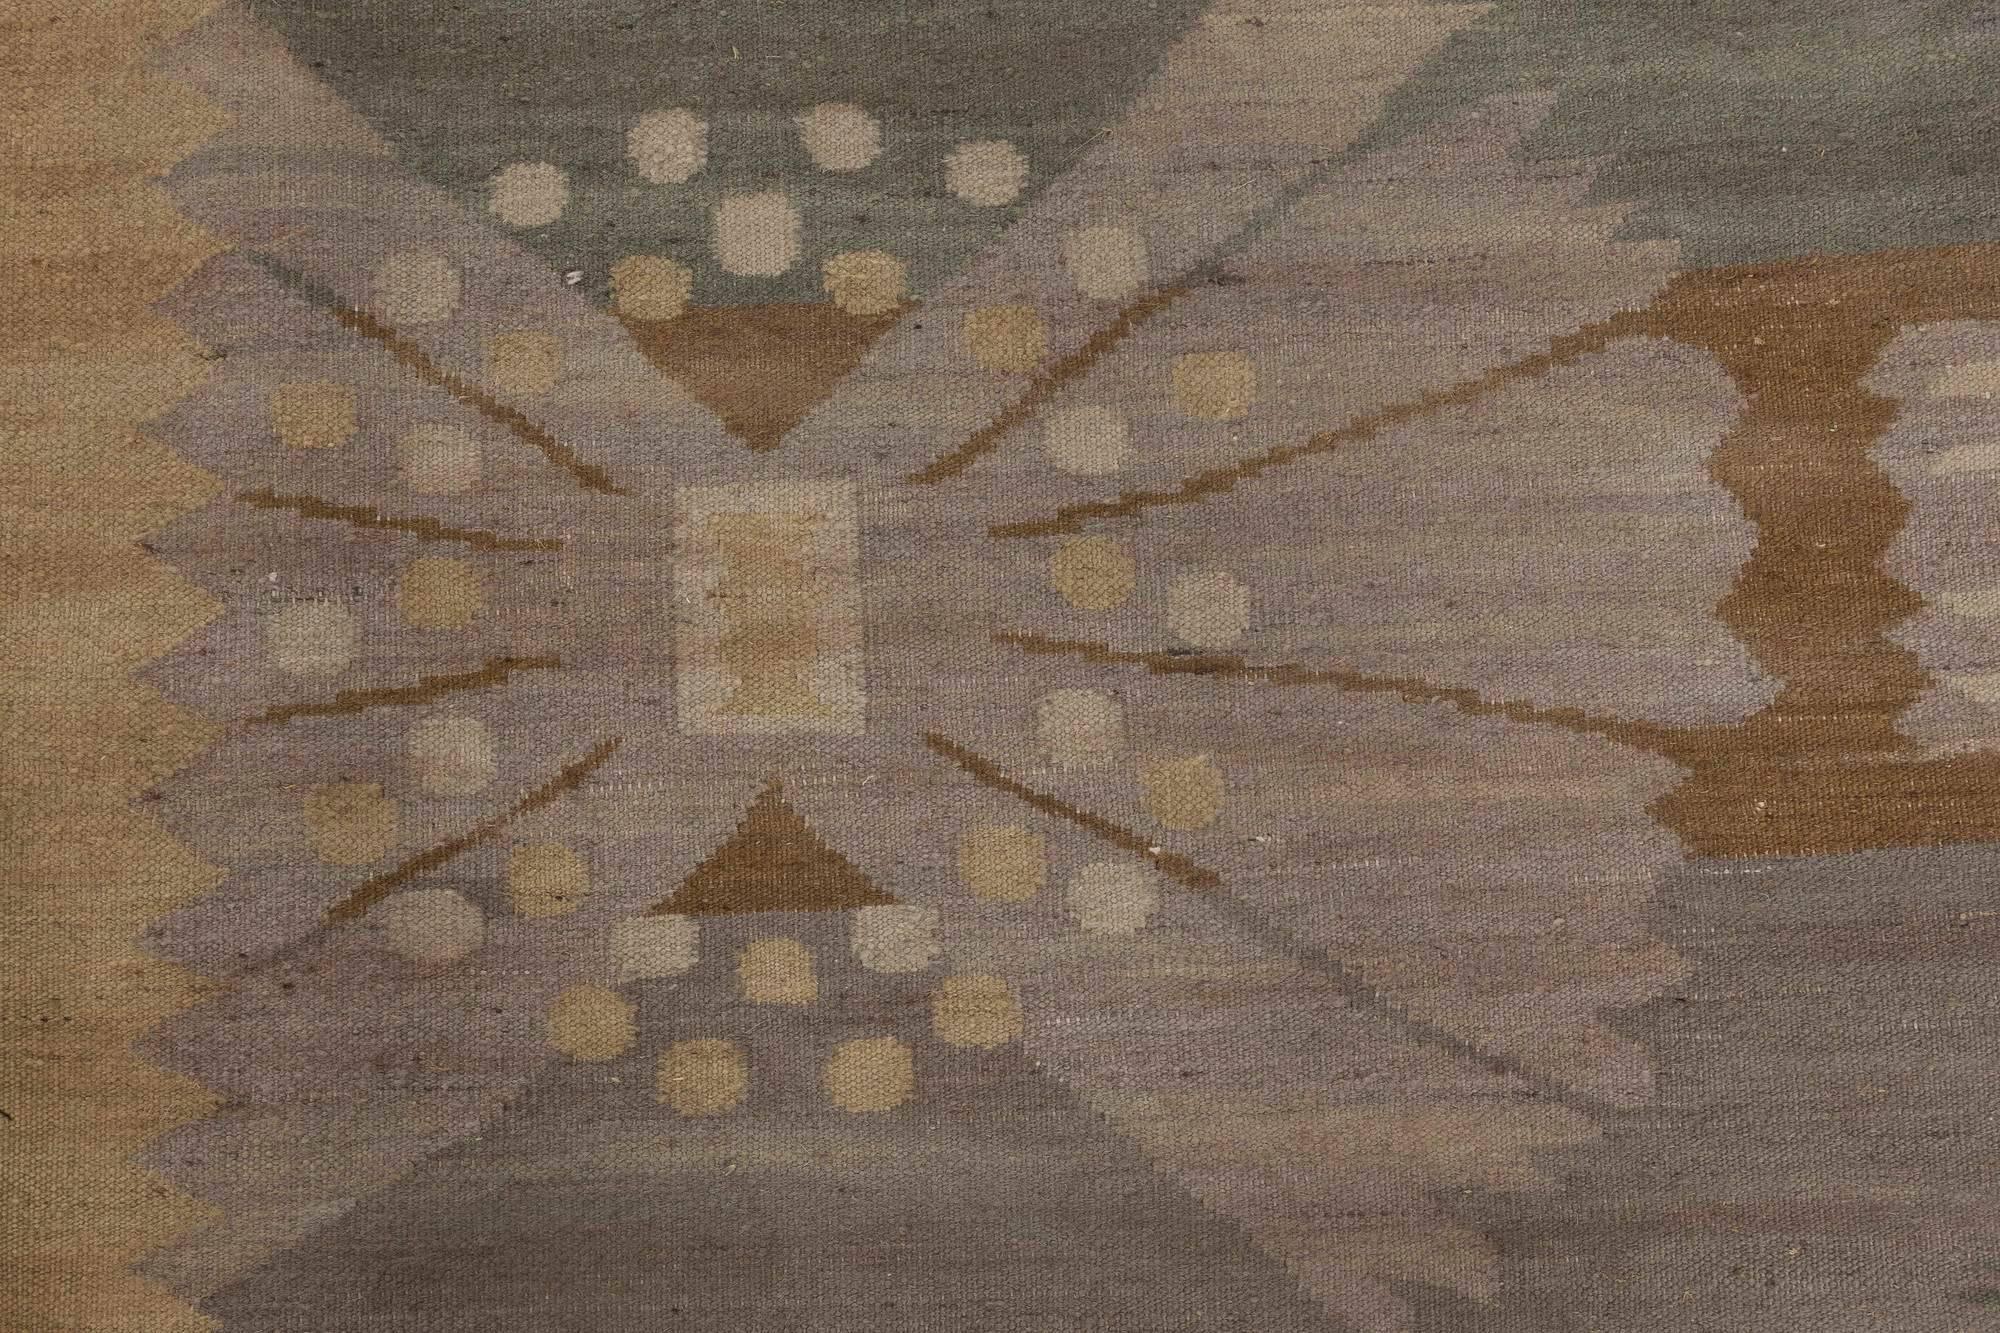 Swedish design flat-weave rug.
Size: 12'5